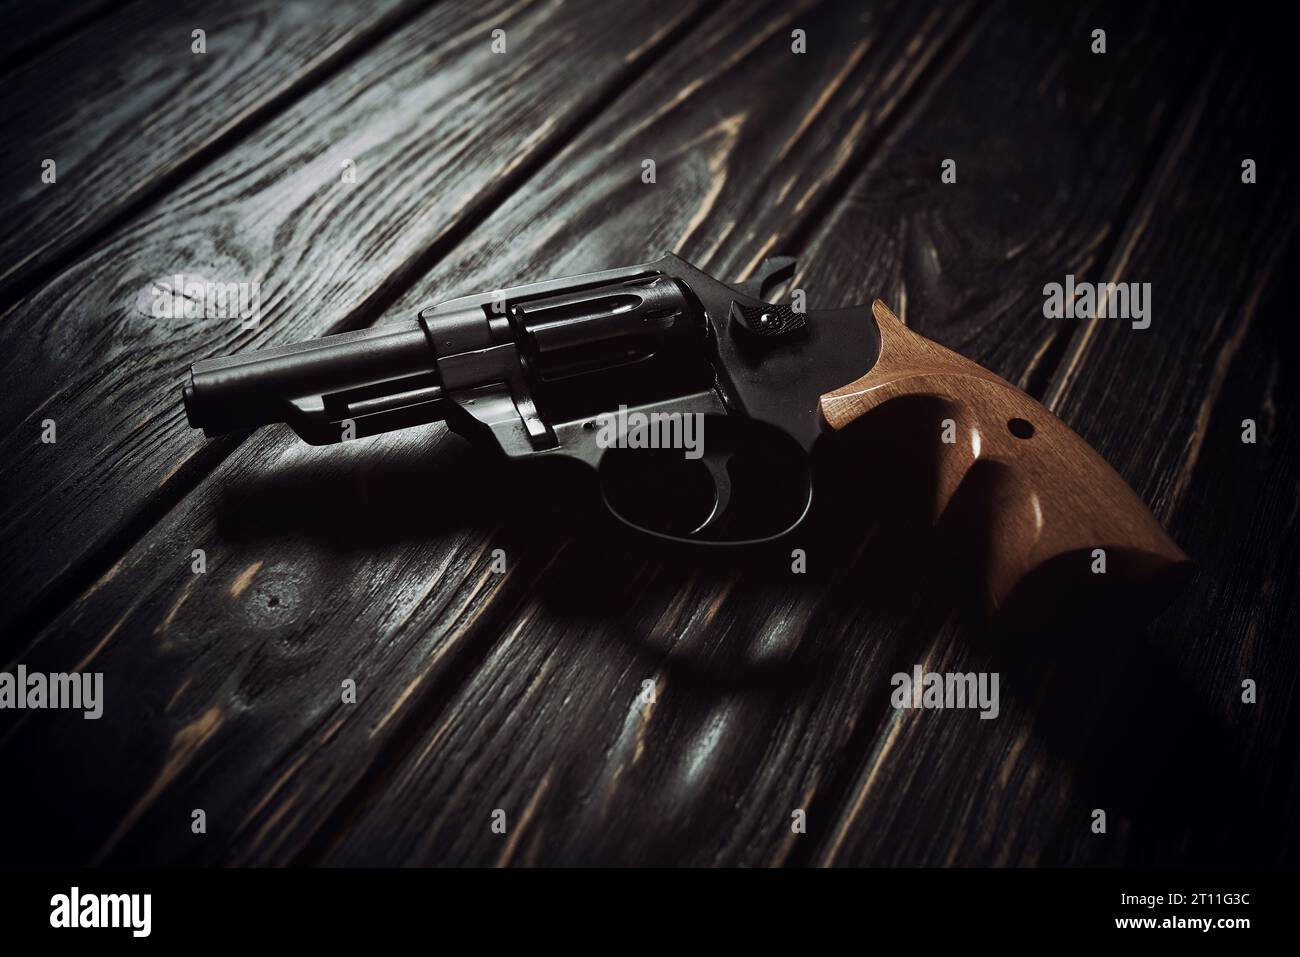 Black revolver pistol on dark wooden background Stock Photo